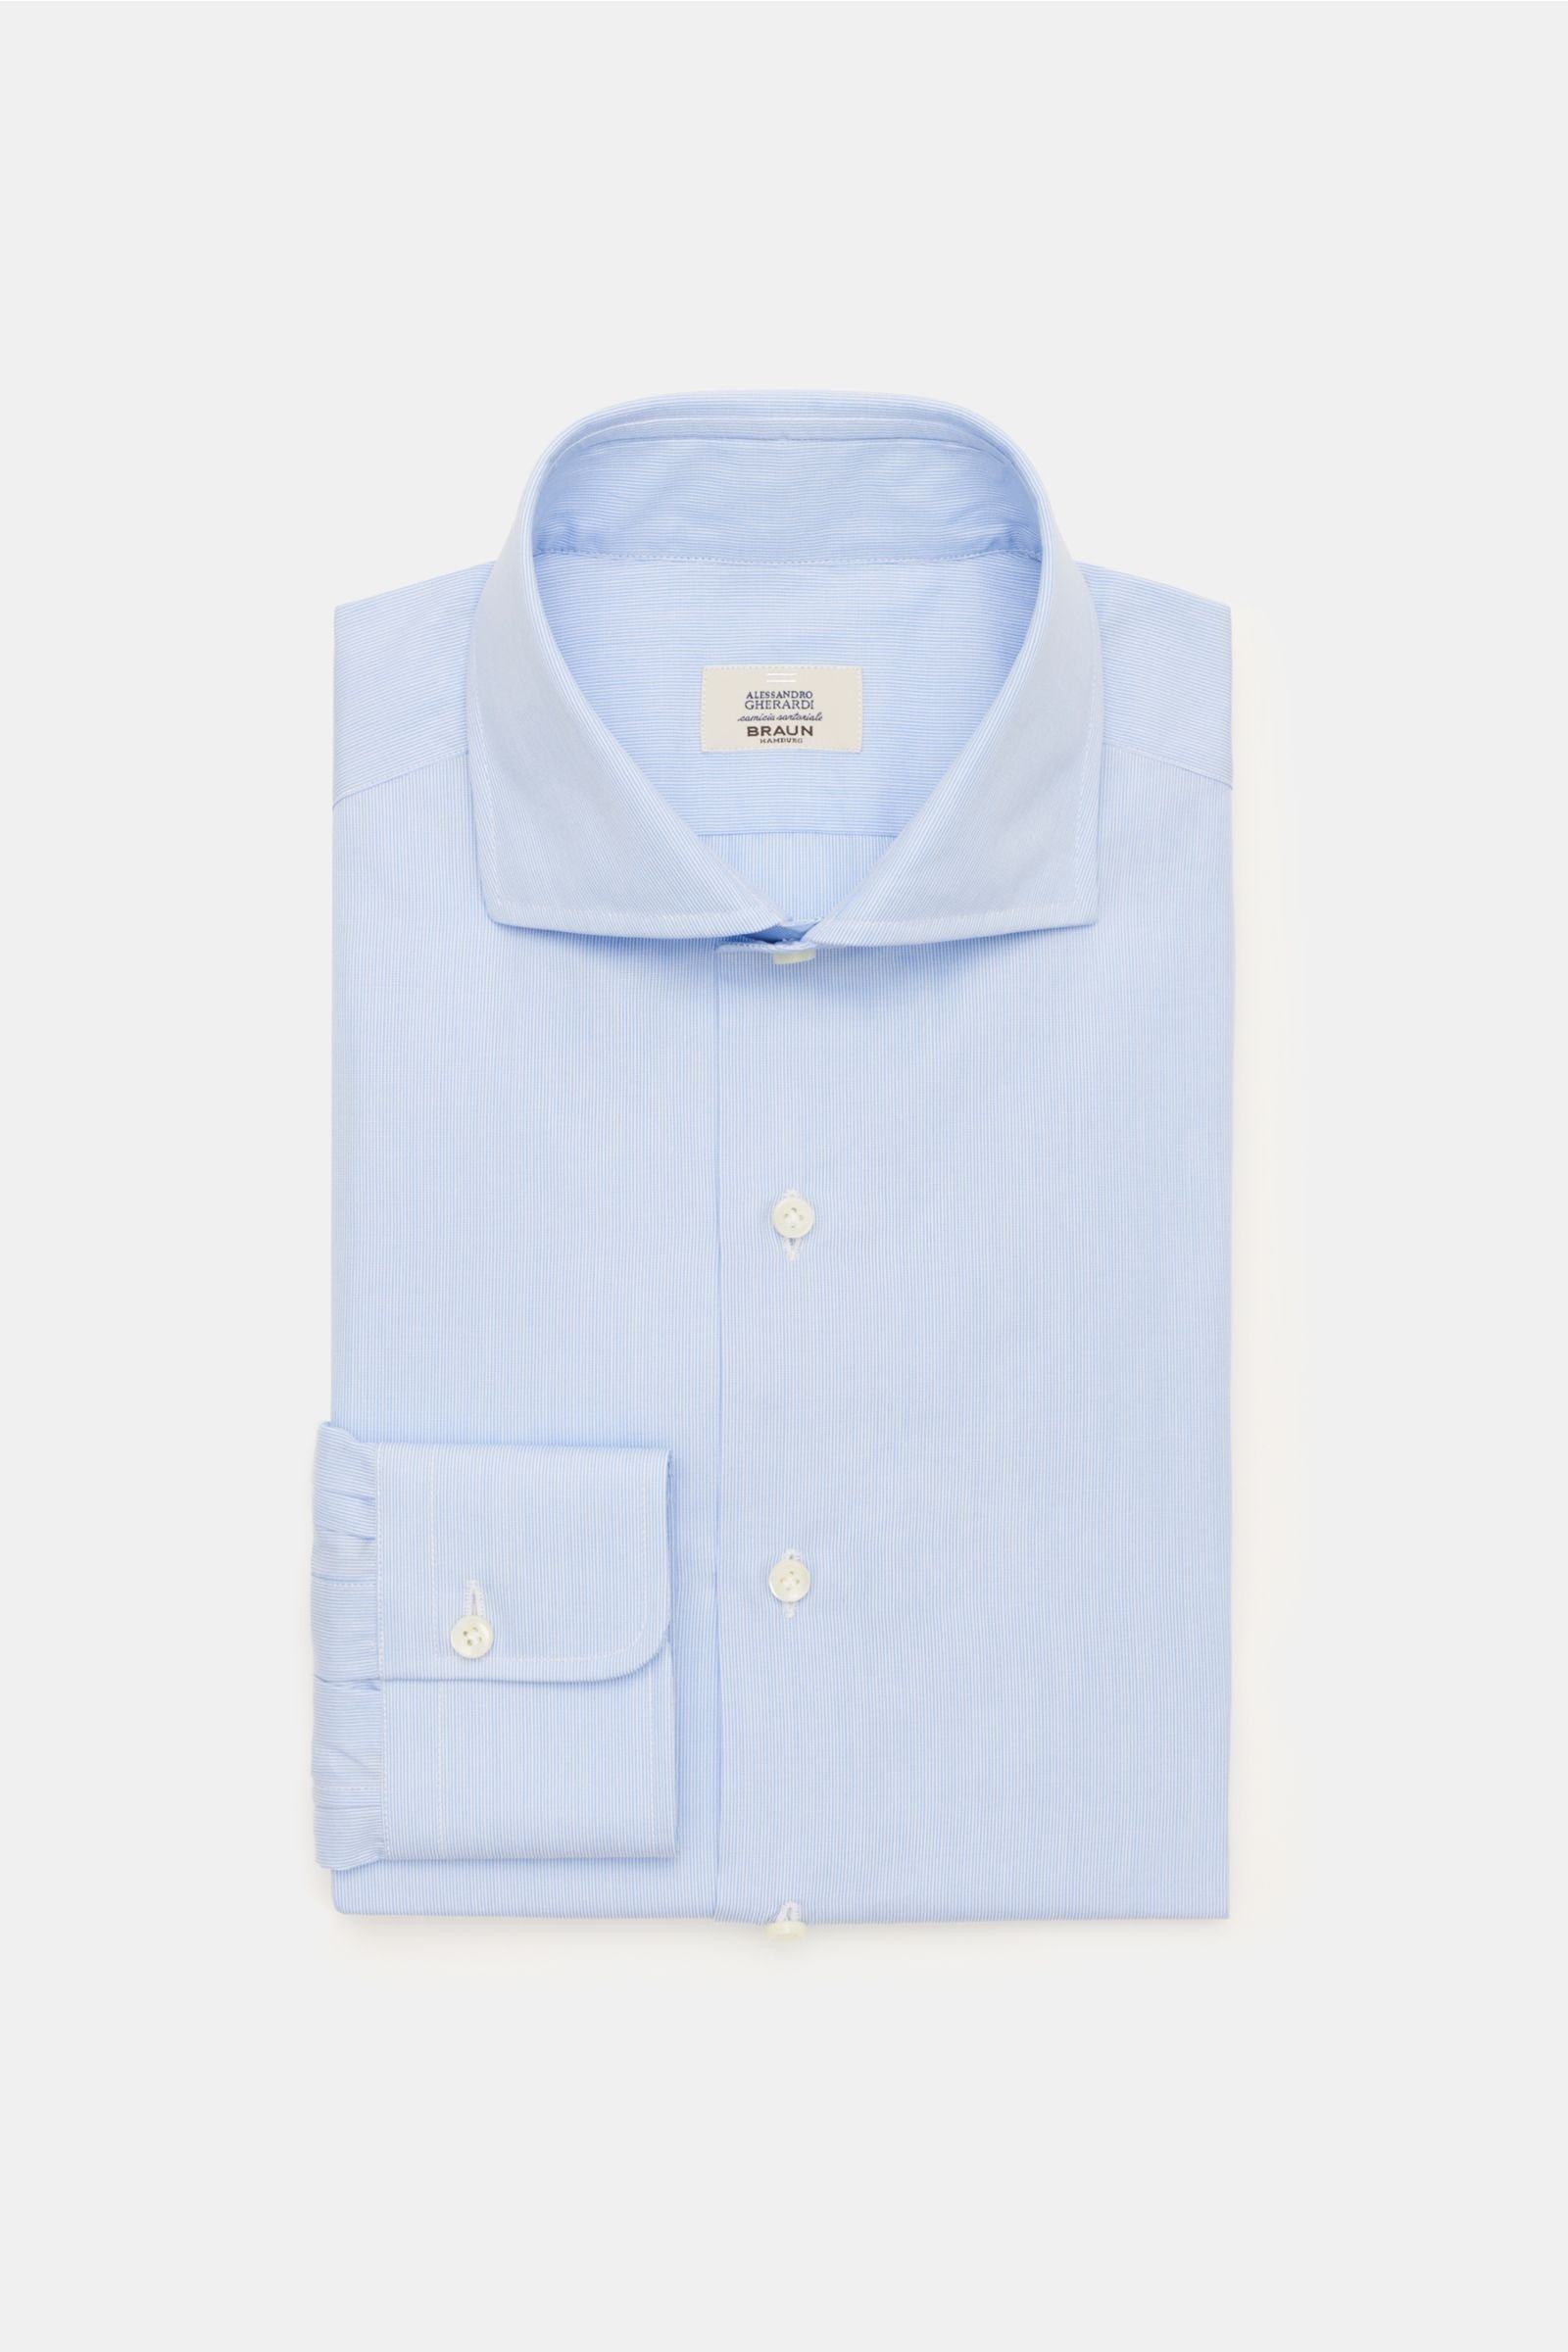 Business shirt shark collar smoky blue/white striped